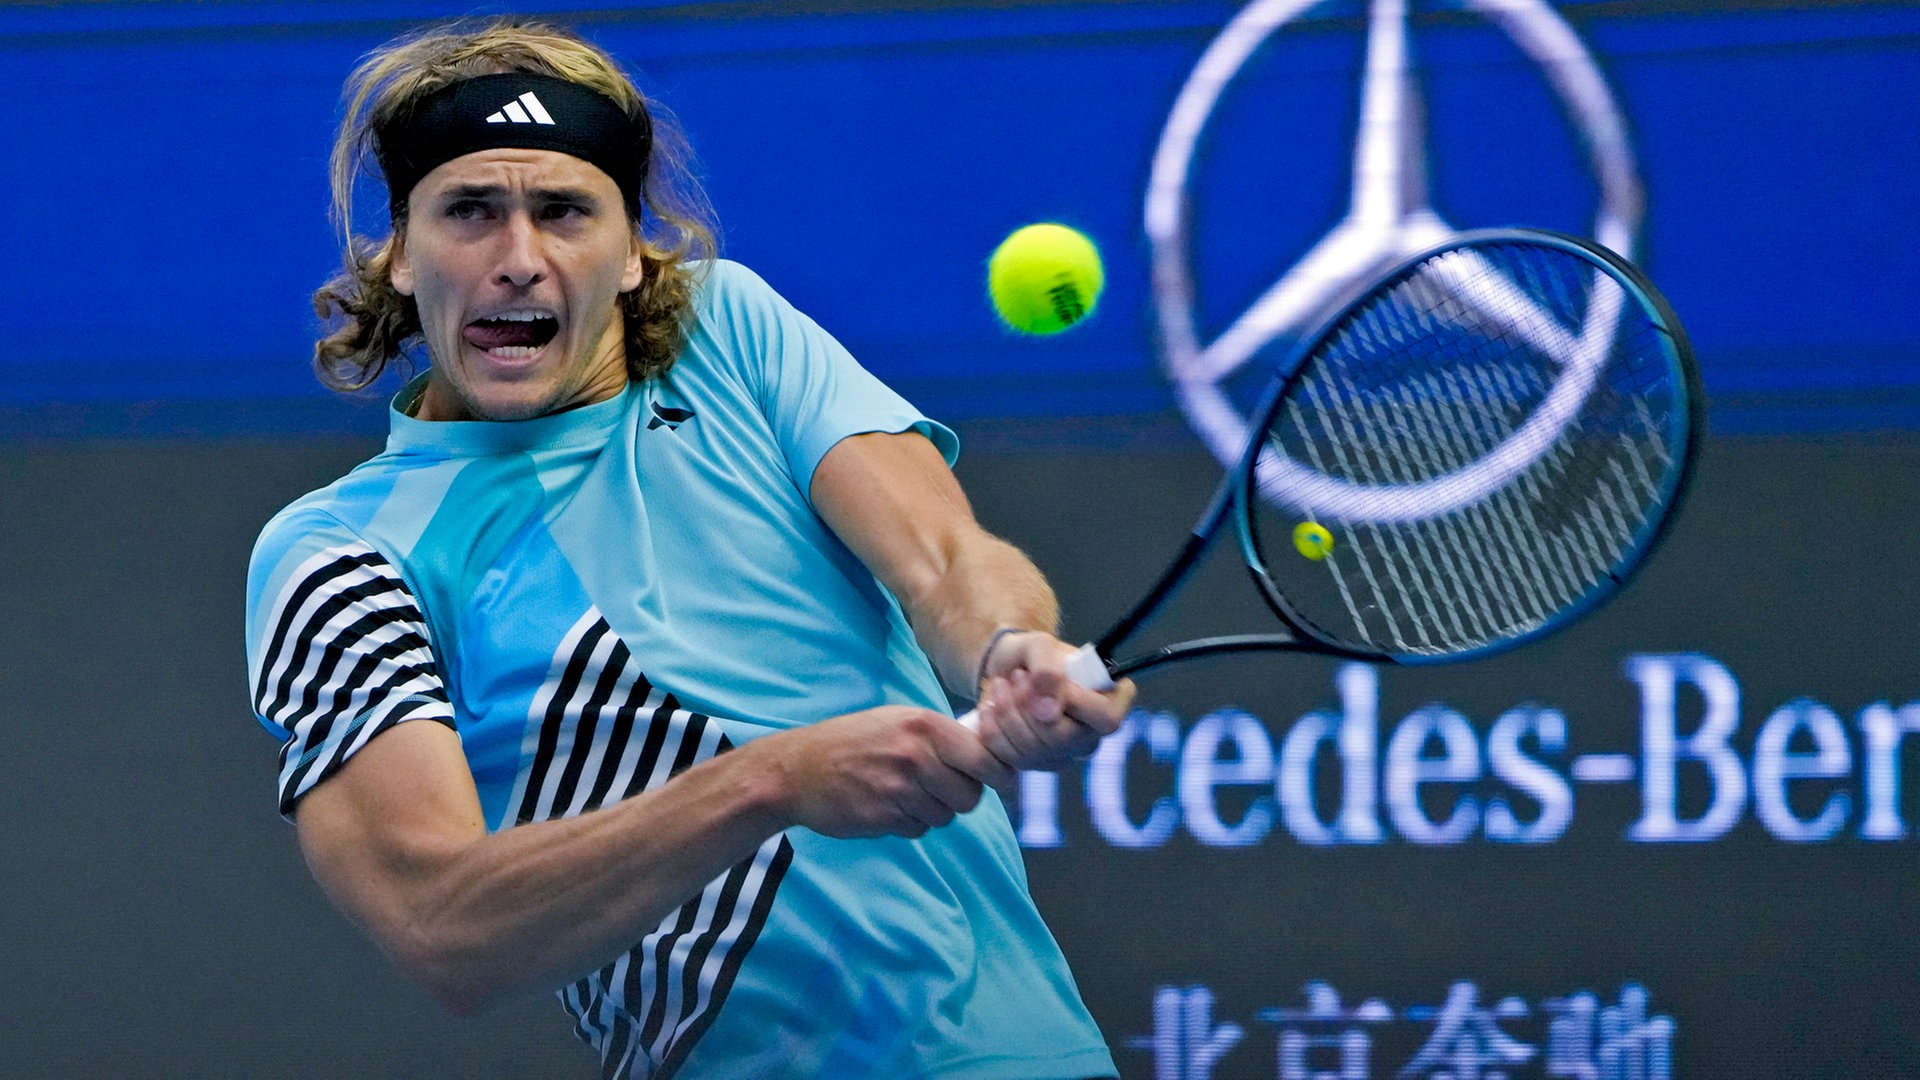 Tennis Zverev scheitert im Halbfinale in Peking an Medwedew NDR.de - Sport